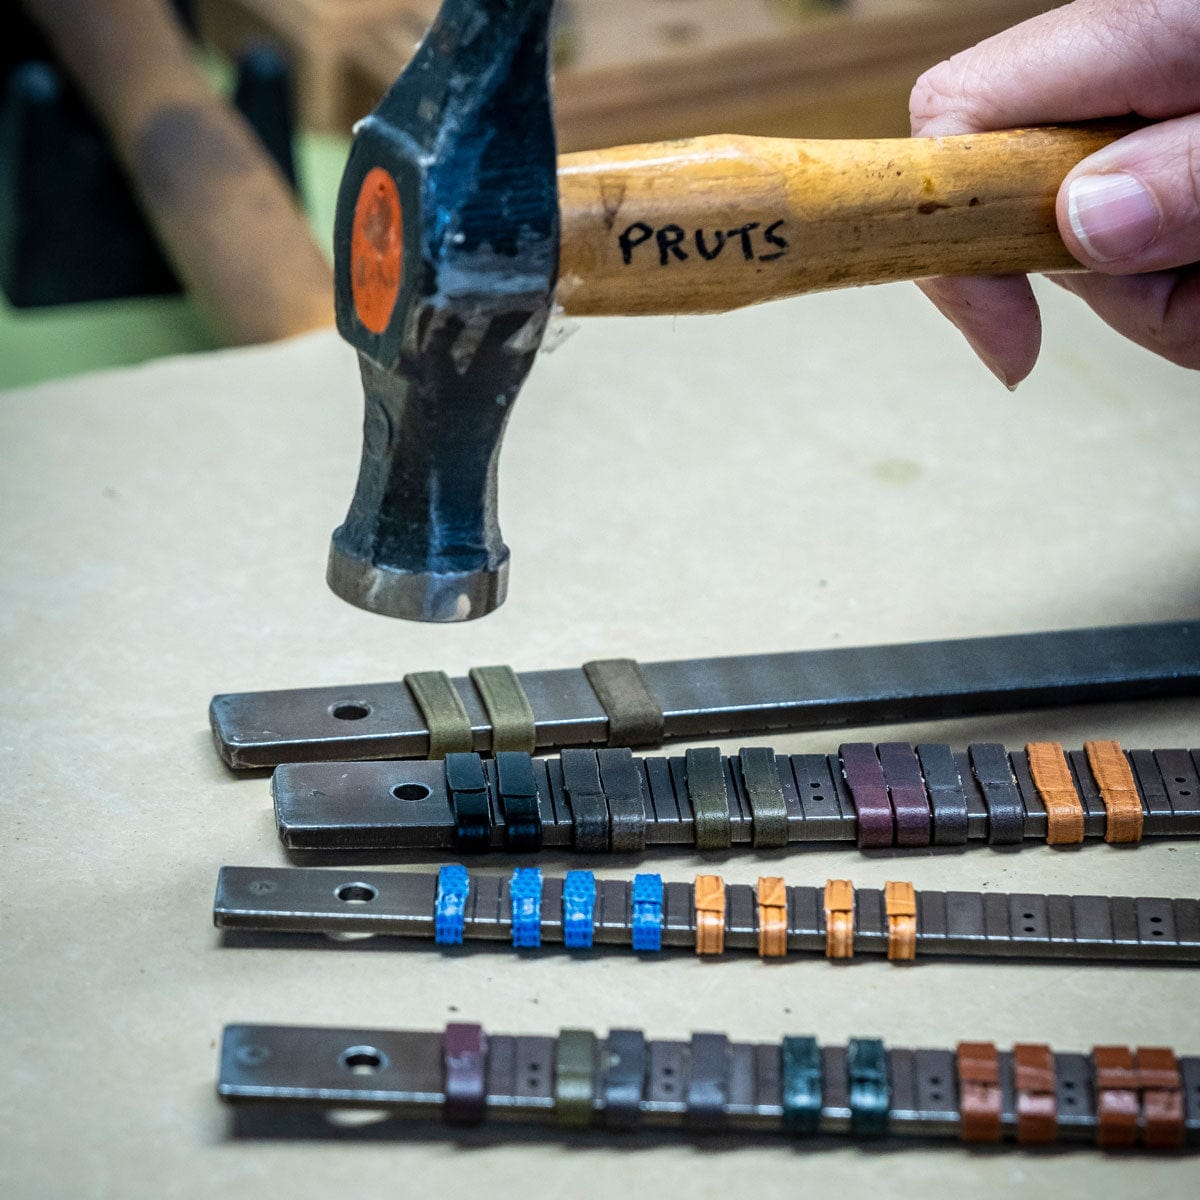 Boutsen Cavallo Racing Handmade Leather Watch Strap - Chocolate Brown